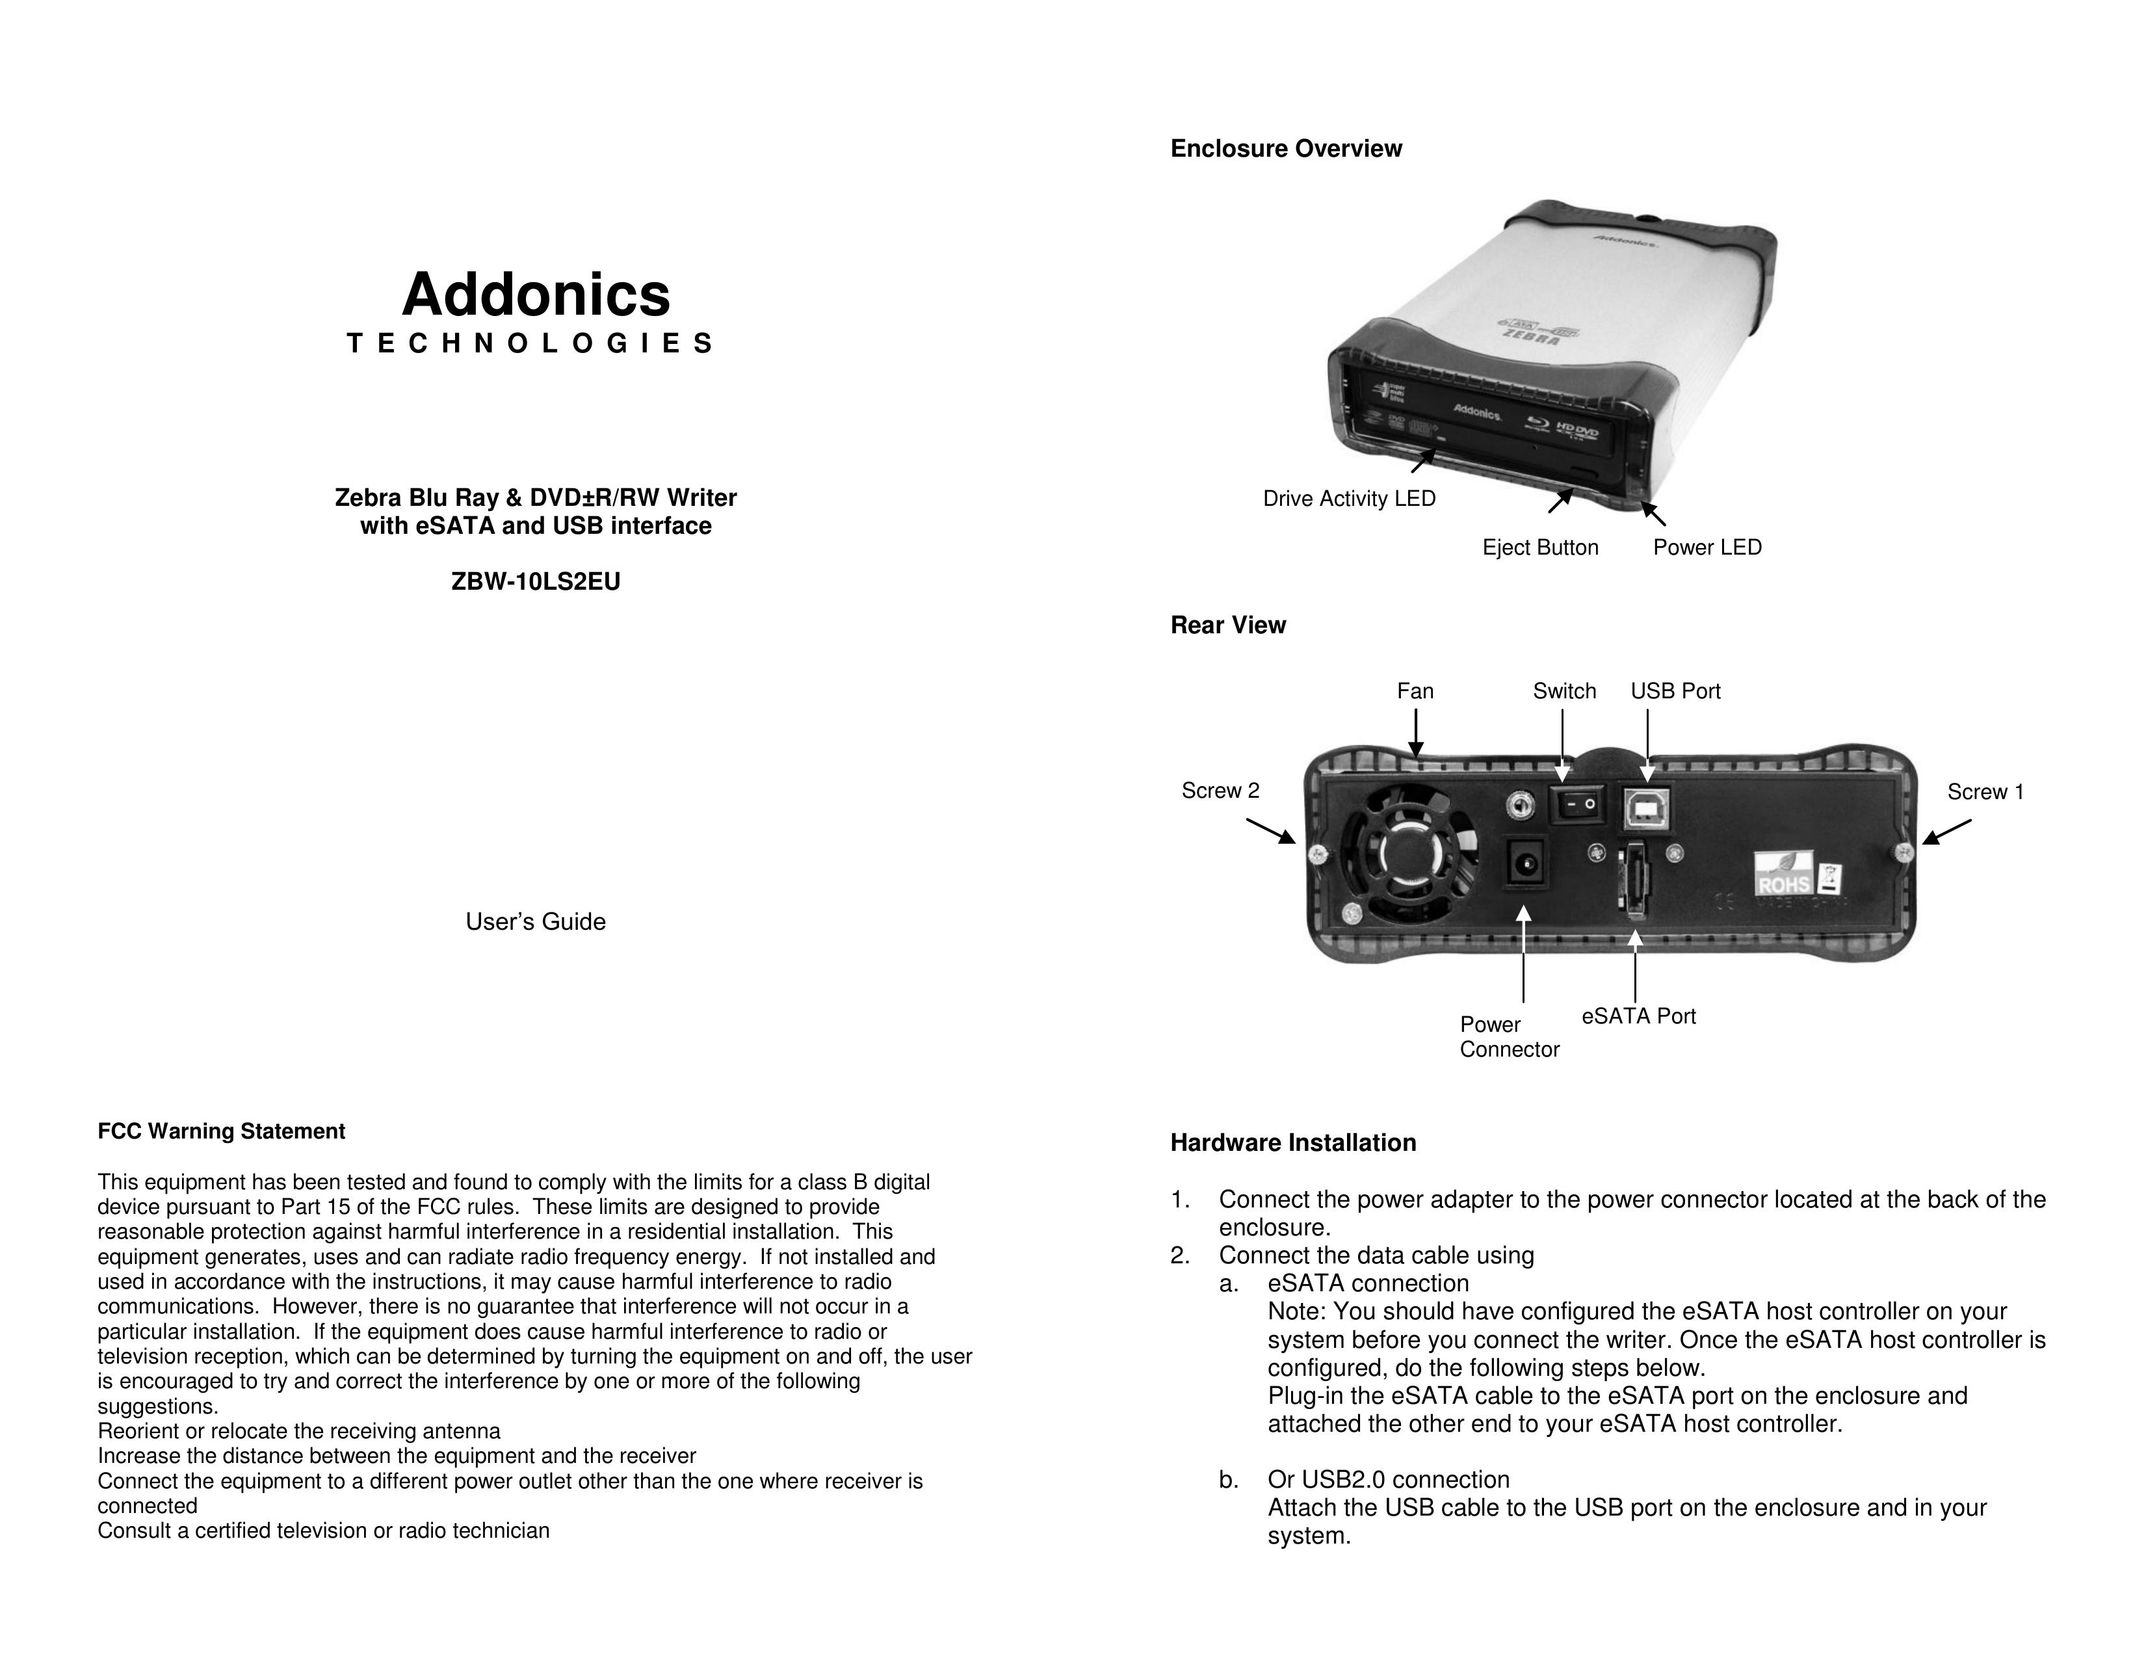 Addonics Technologies ZBW-10LS2EU Blu-ray Player User Manual (Page 1)